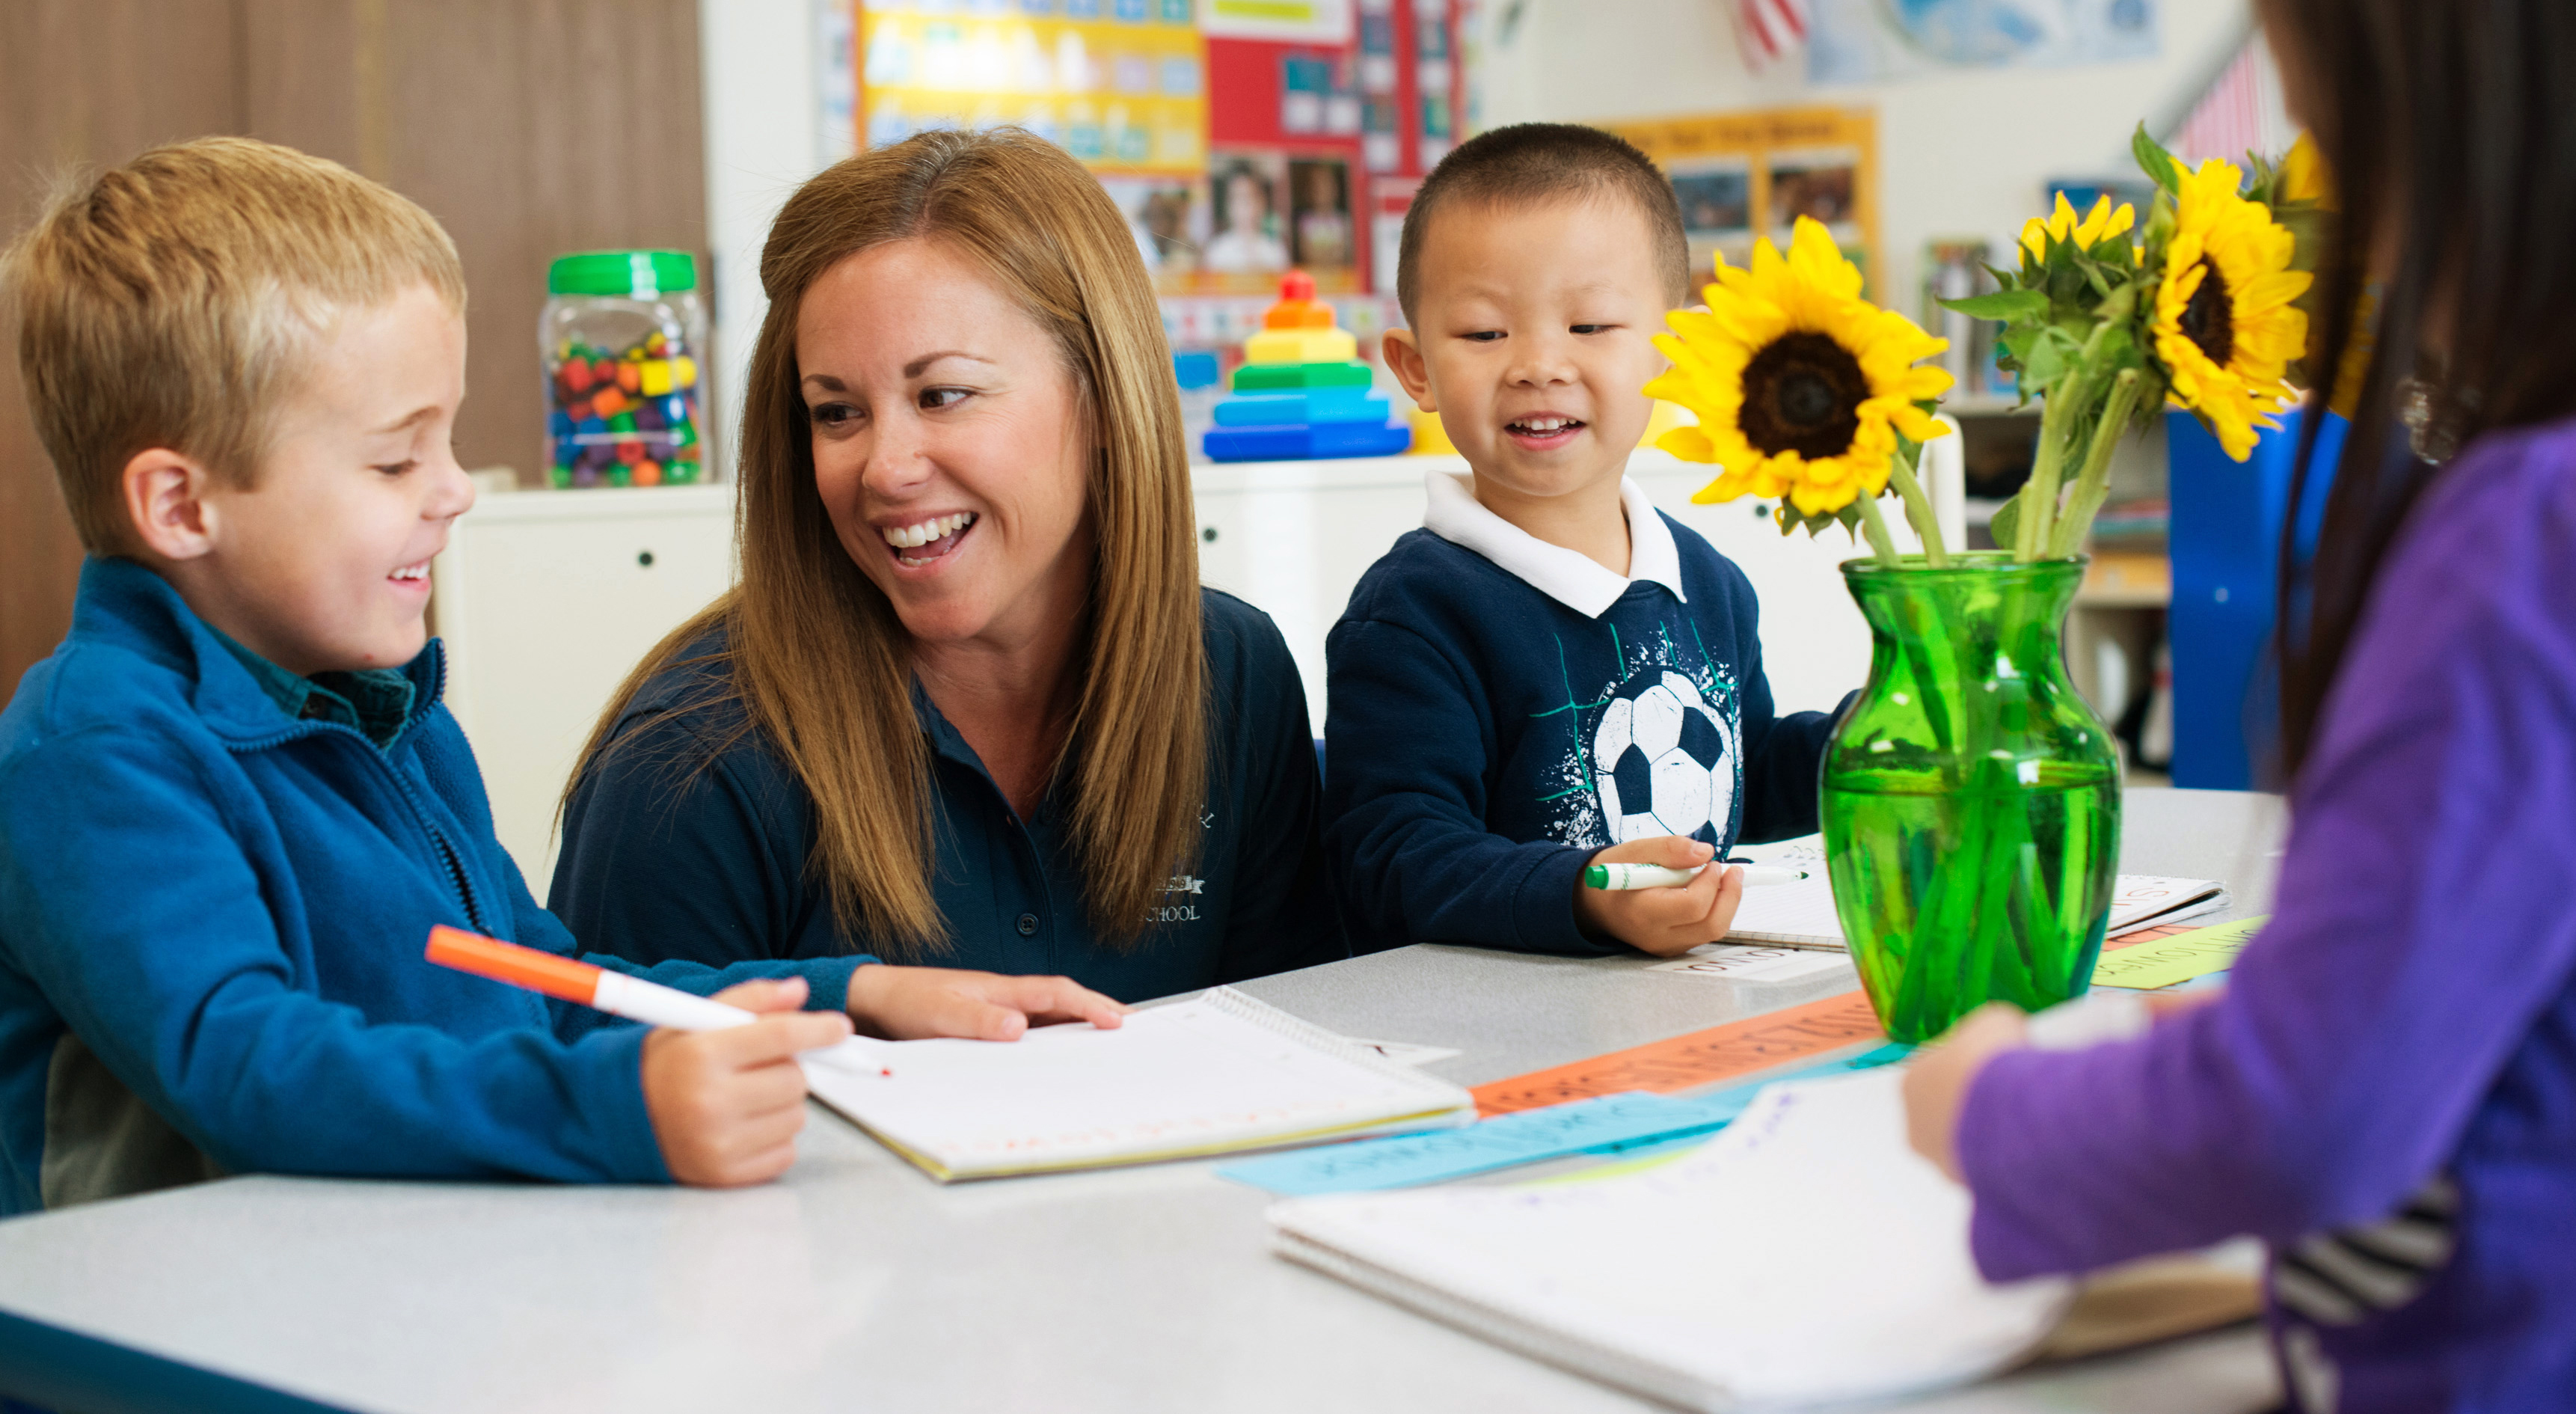 Chesterbrook Academy: Private Preschools & Elementary Schools